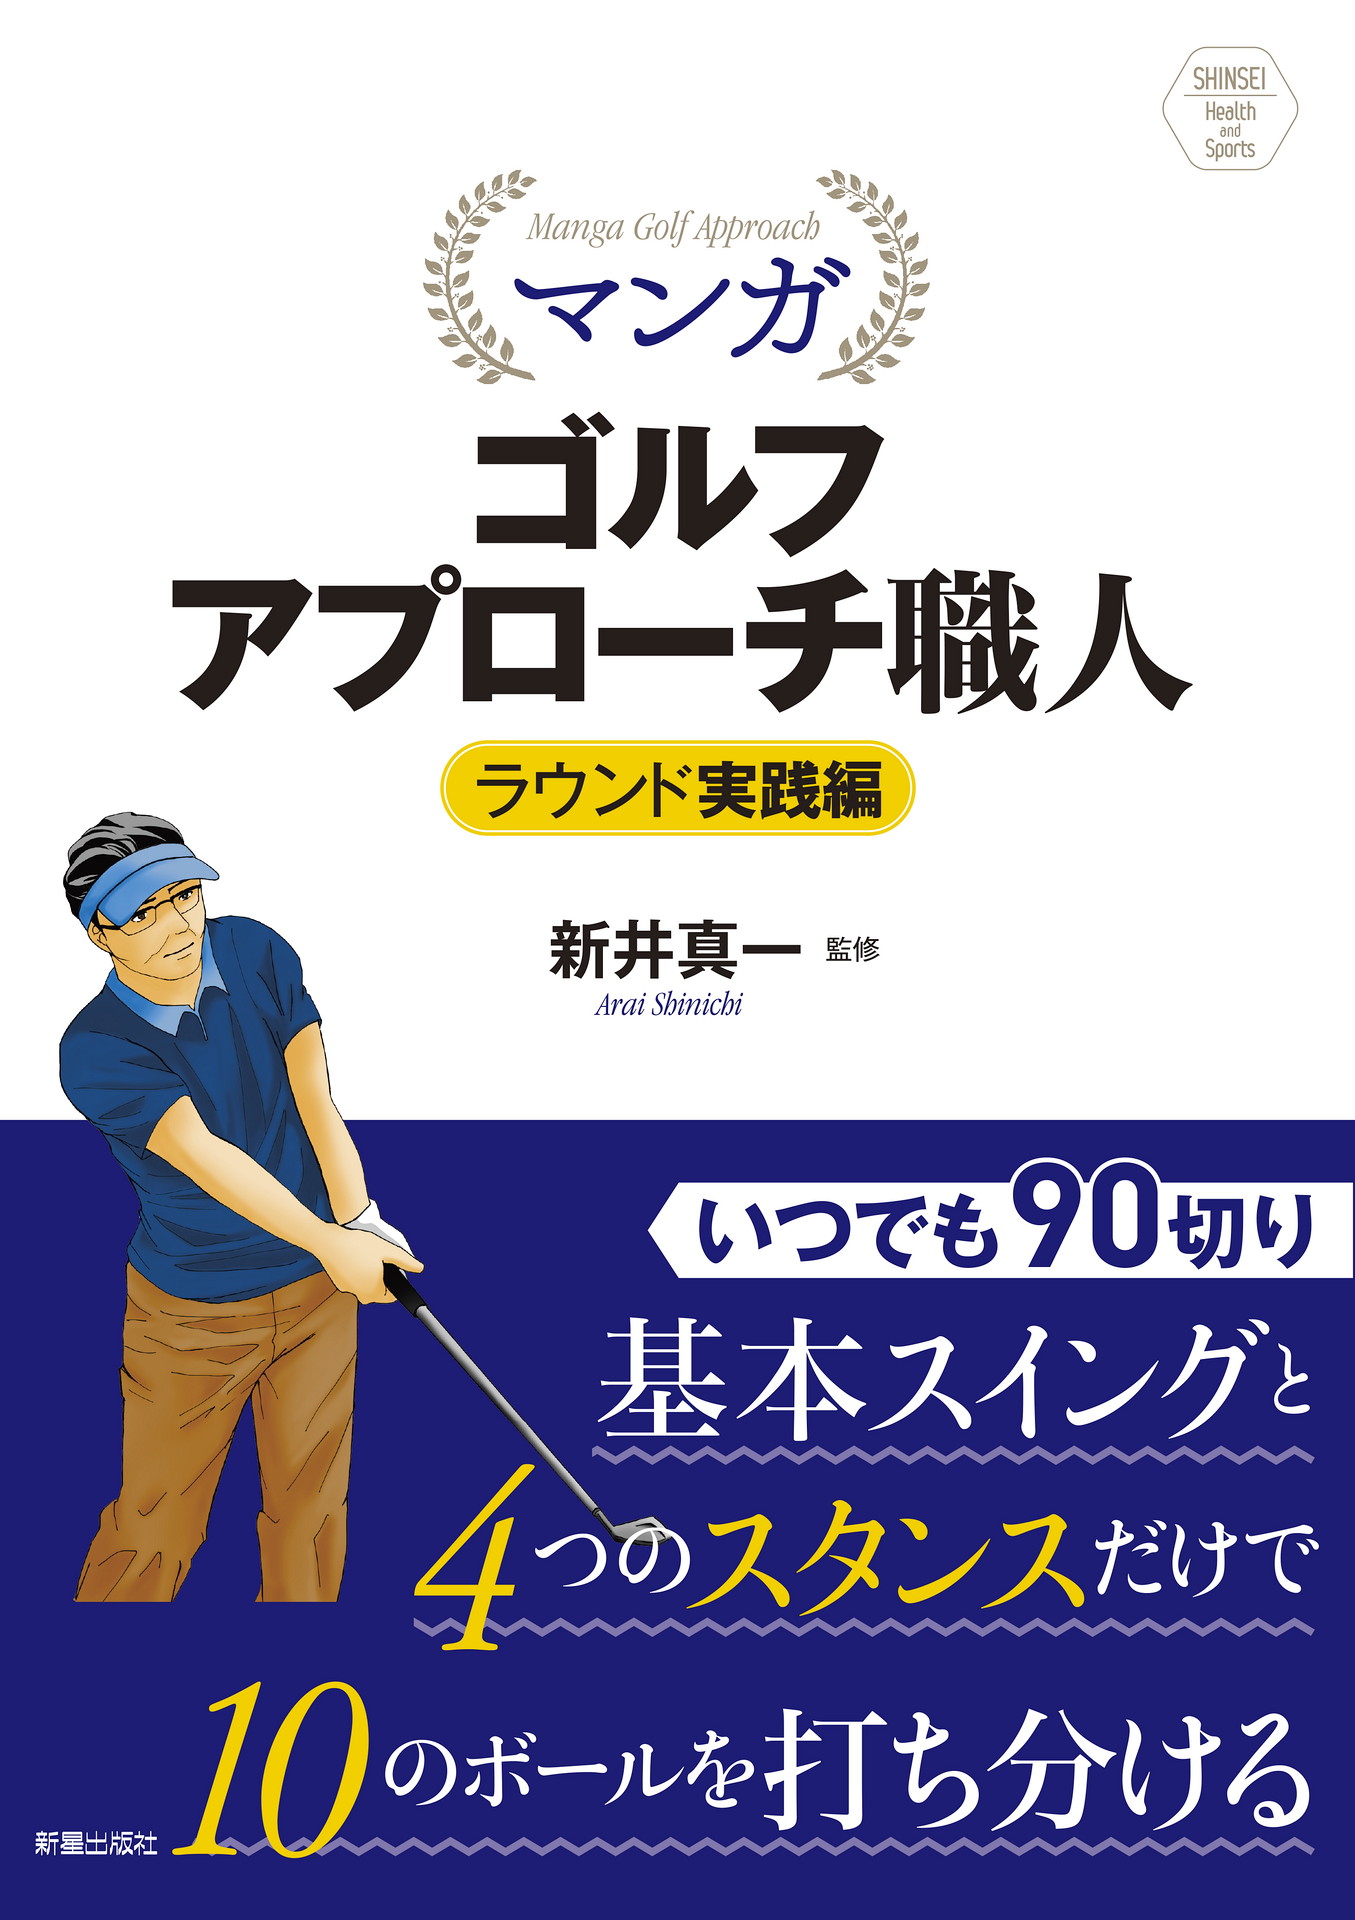 SHINSEI　Health　and　Sports　マンガ　ゴルフアプローチ職人　ラウンド実践編の商品画像